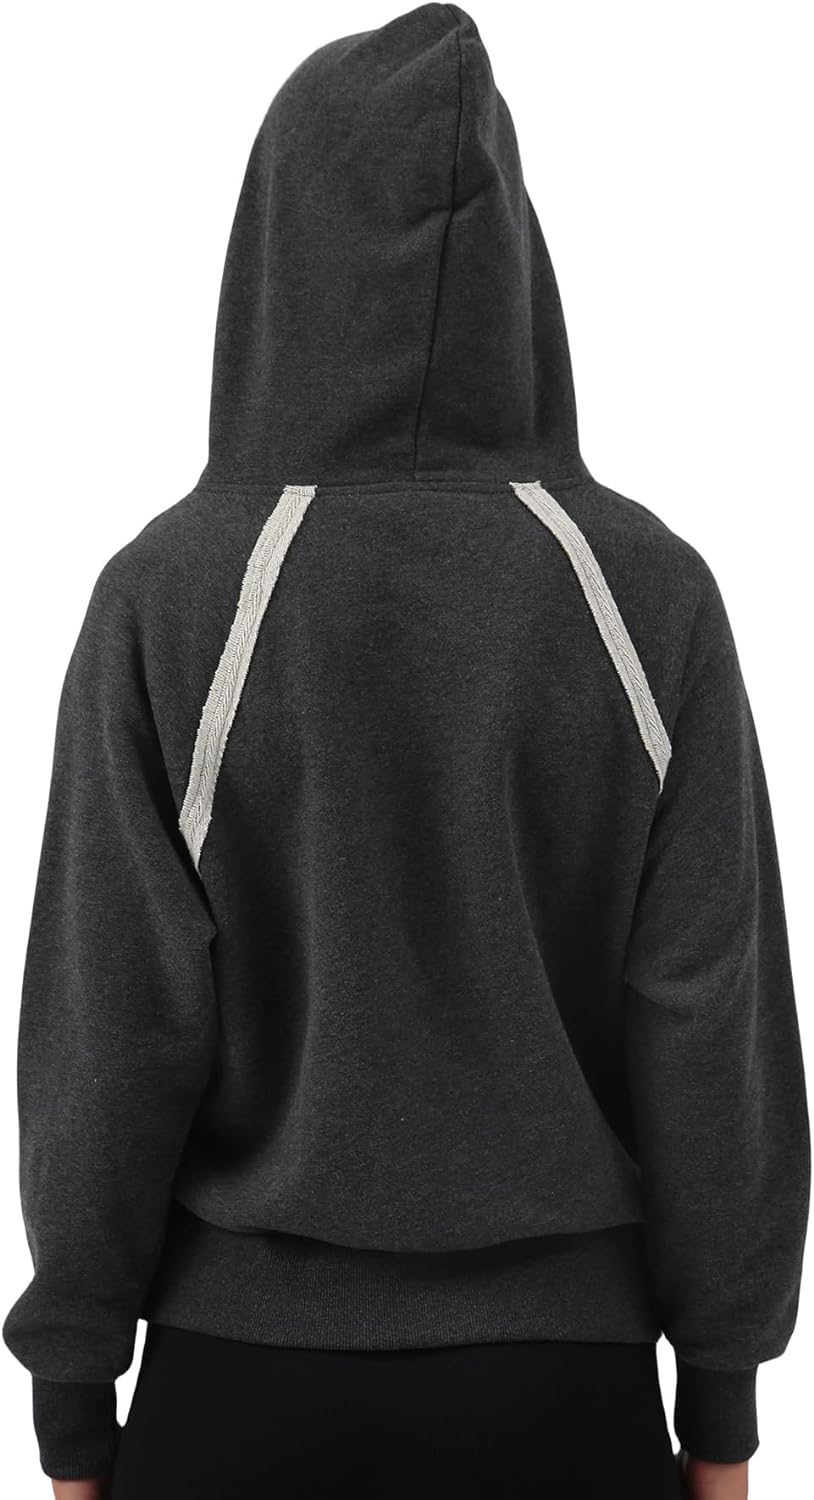 NTG Fad Long Sleeve Hoodie with Pockets Hooded Sweatshirt